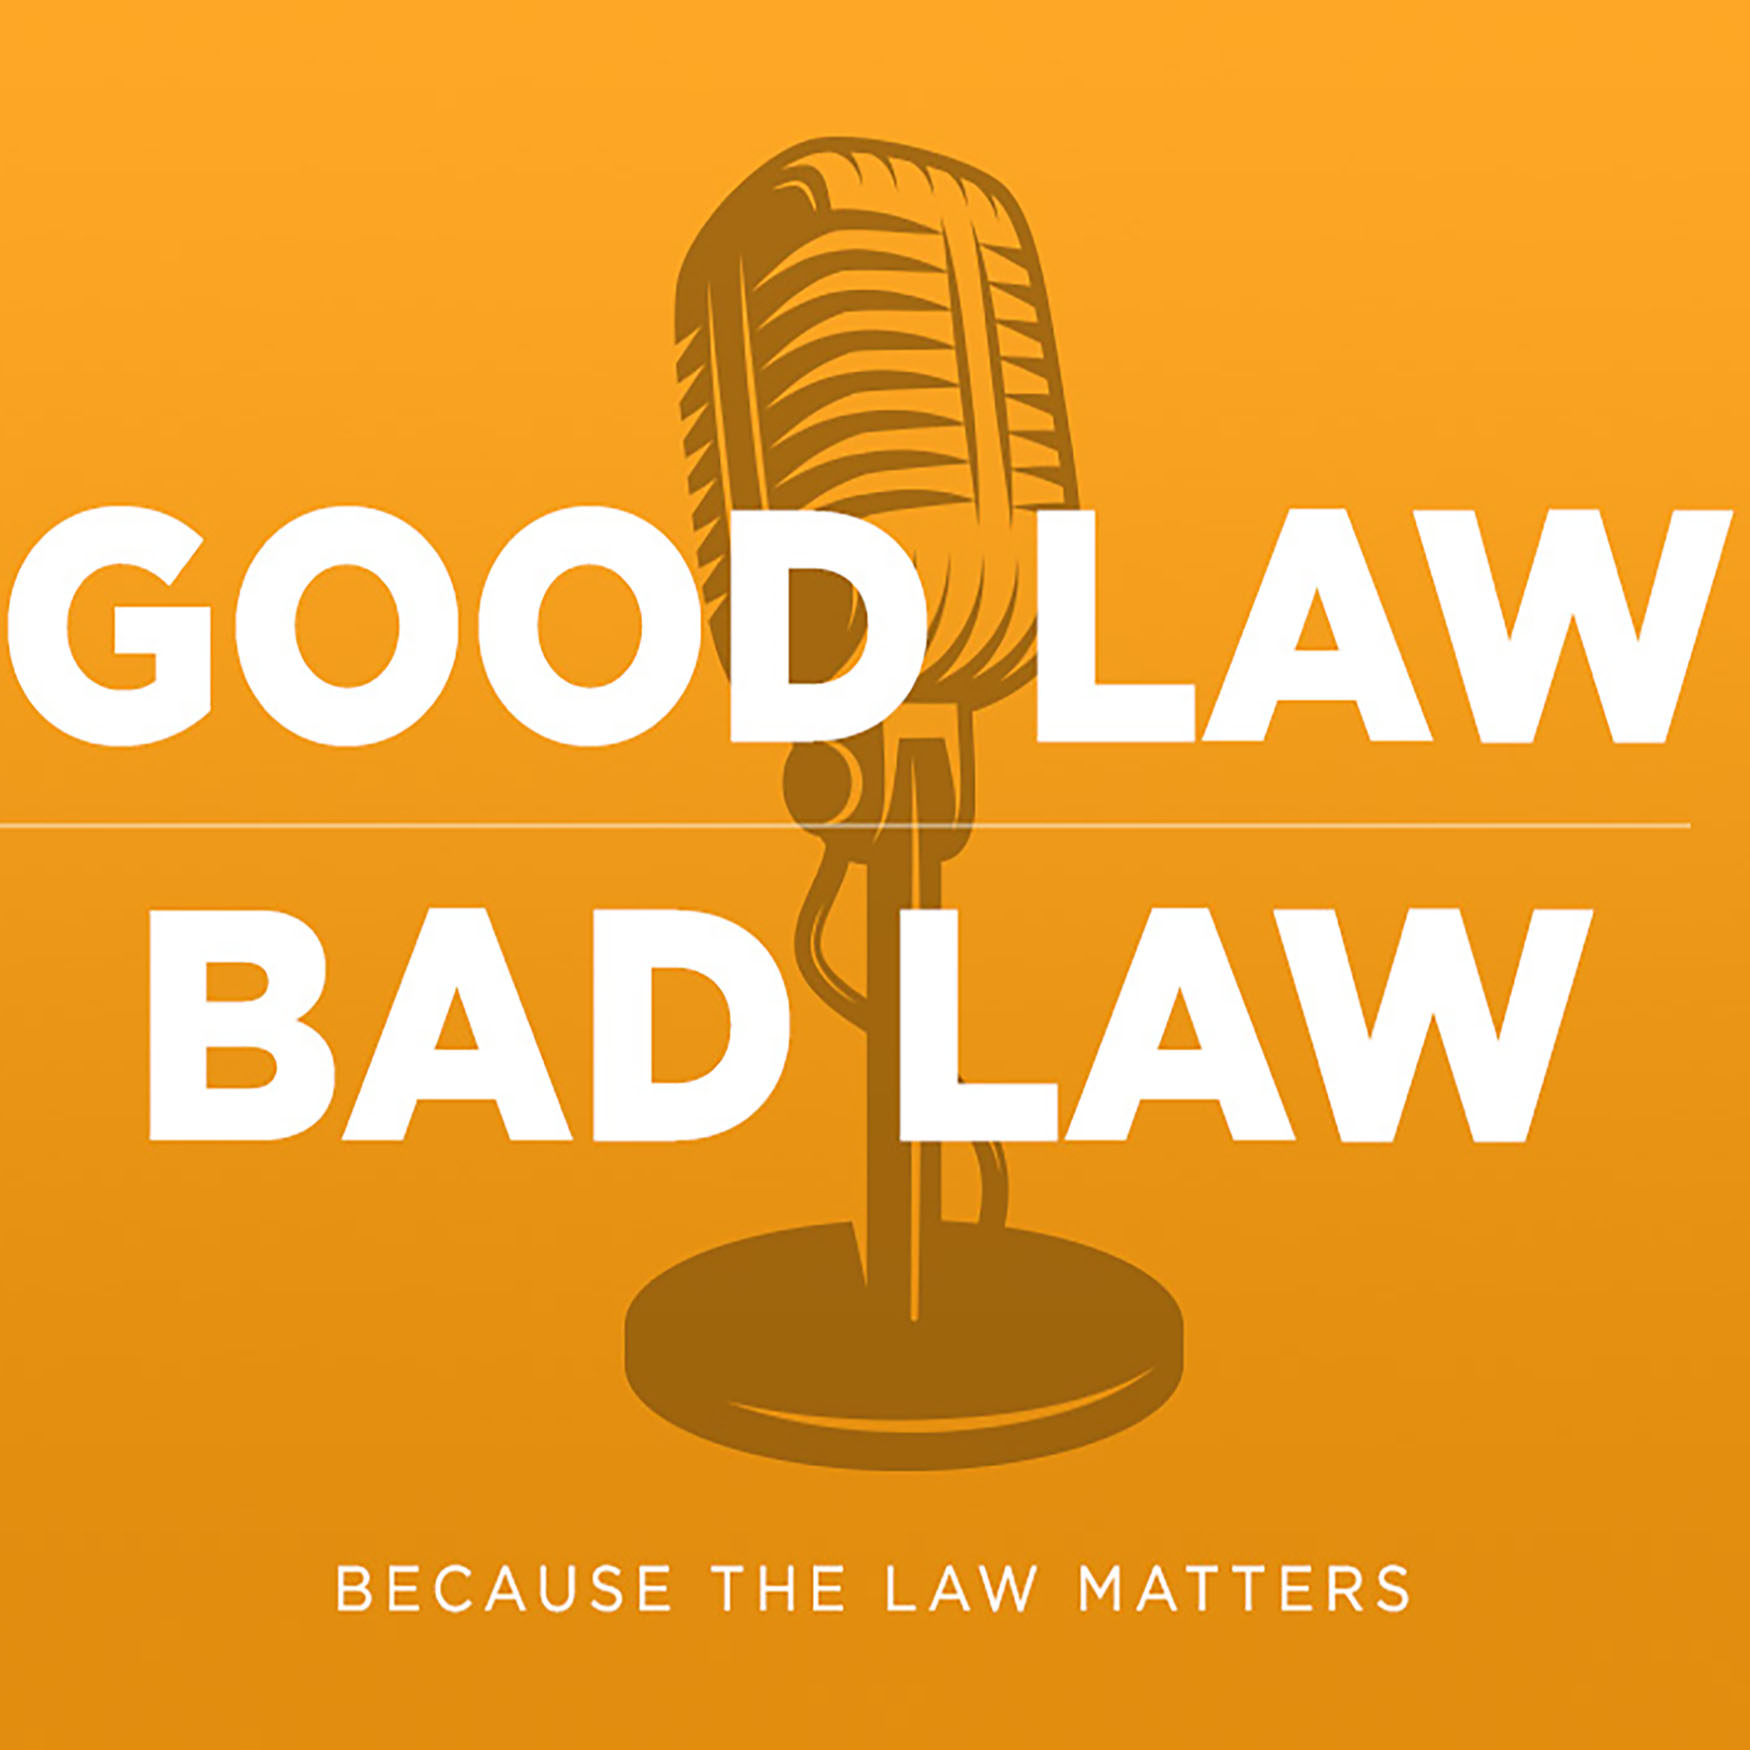 Good Law | Bad Law